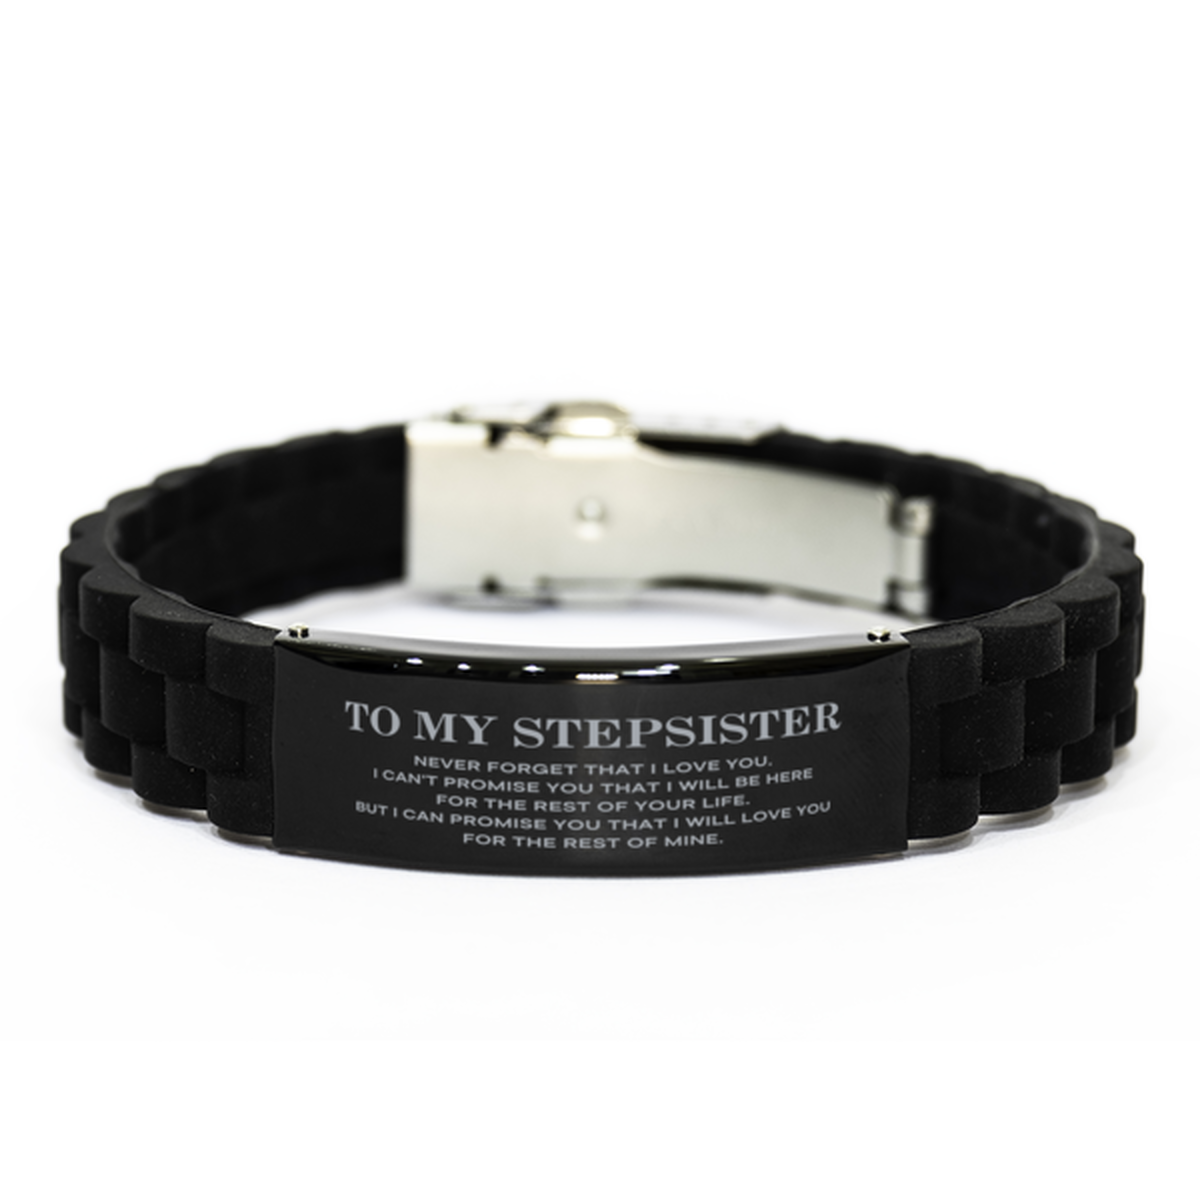 To My Stepsister Gifts, I will love you for the rest of mine, Love Stepsister Bracelet, Birthday Christmas Unique Black Glidelock Clasp Bracelet For Stepsister